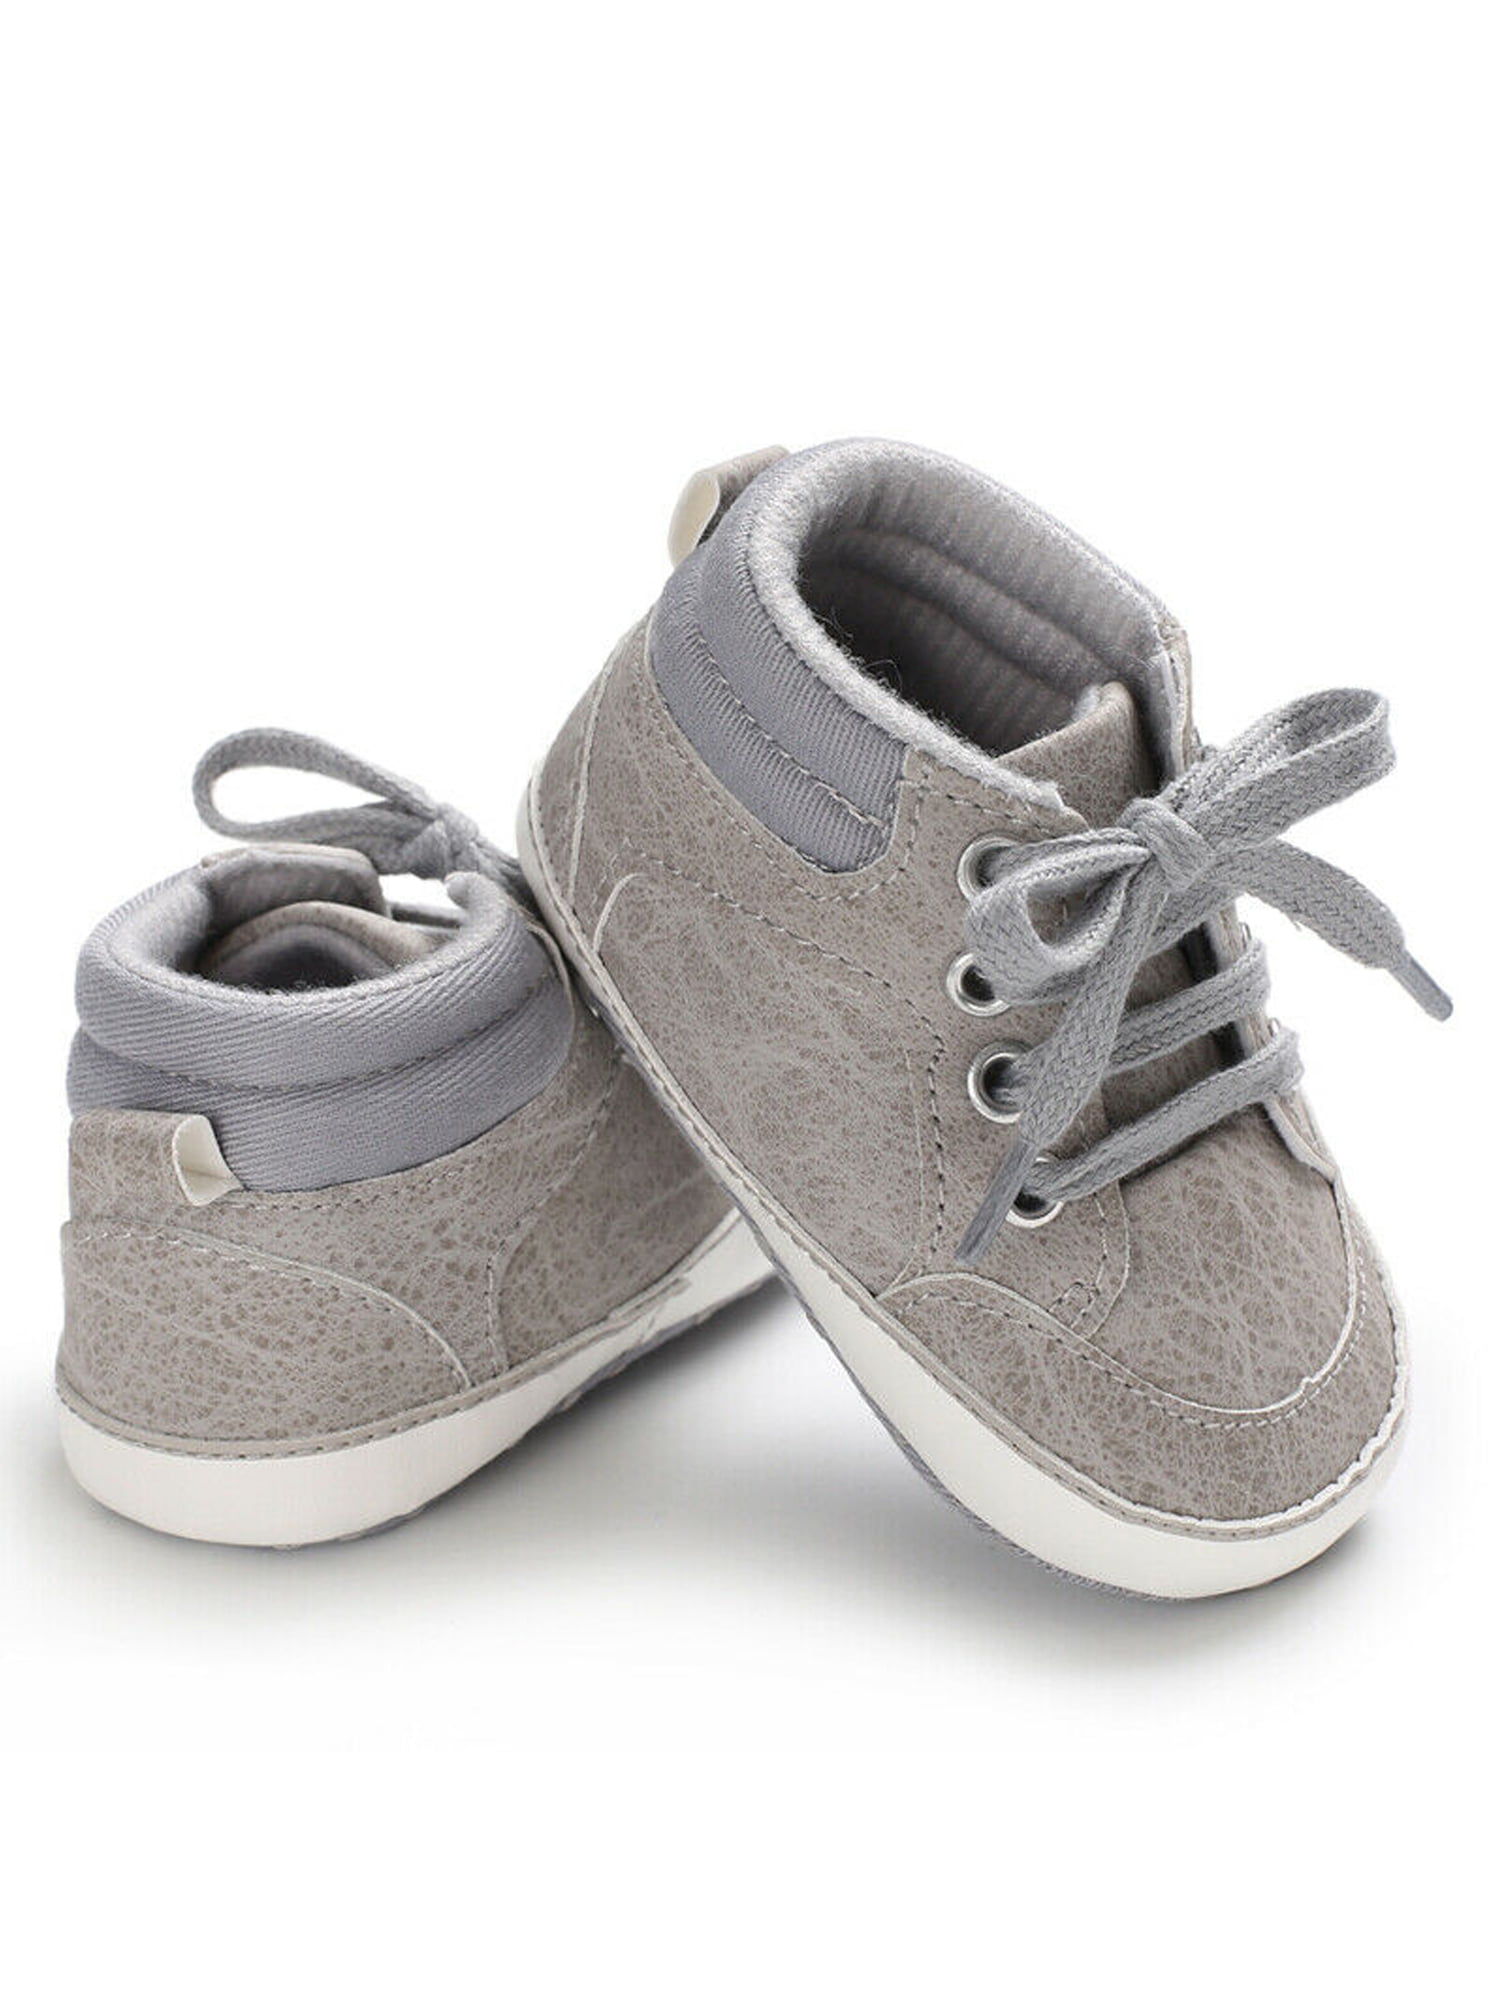 Infant Baby Boy Girls Crib Shoes Anti-slip Prewalker Sole Trainers Sneakers CB 